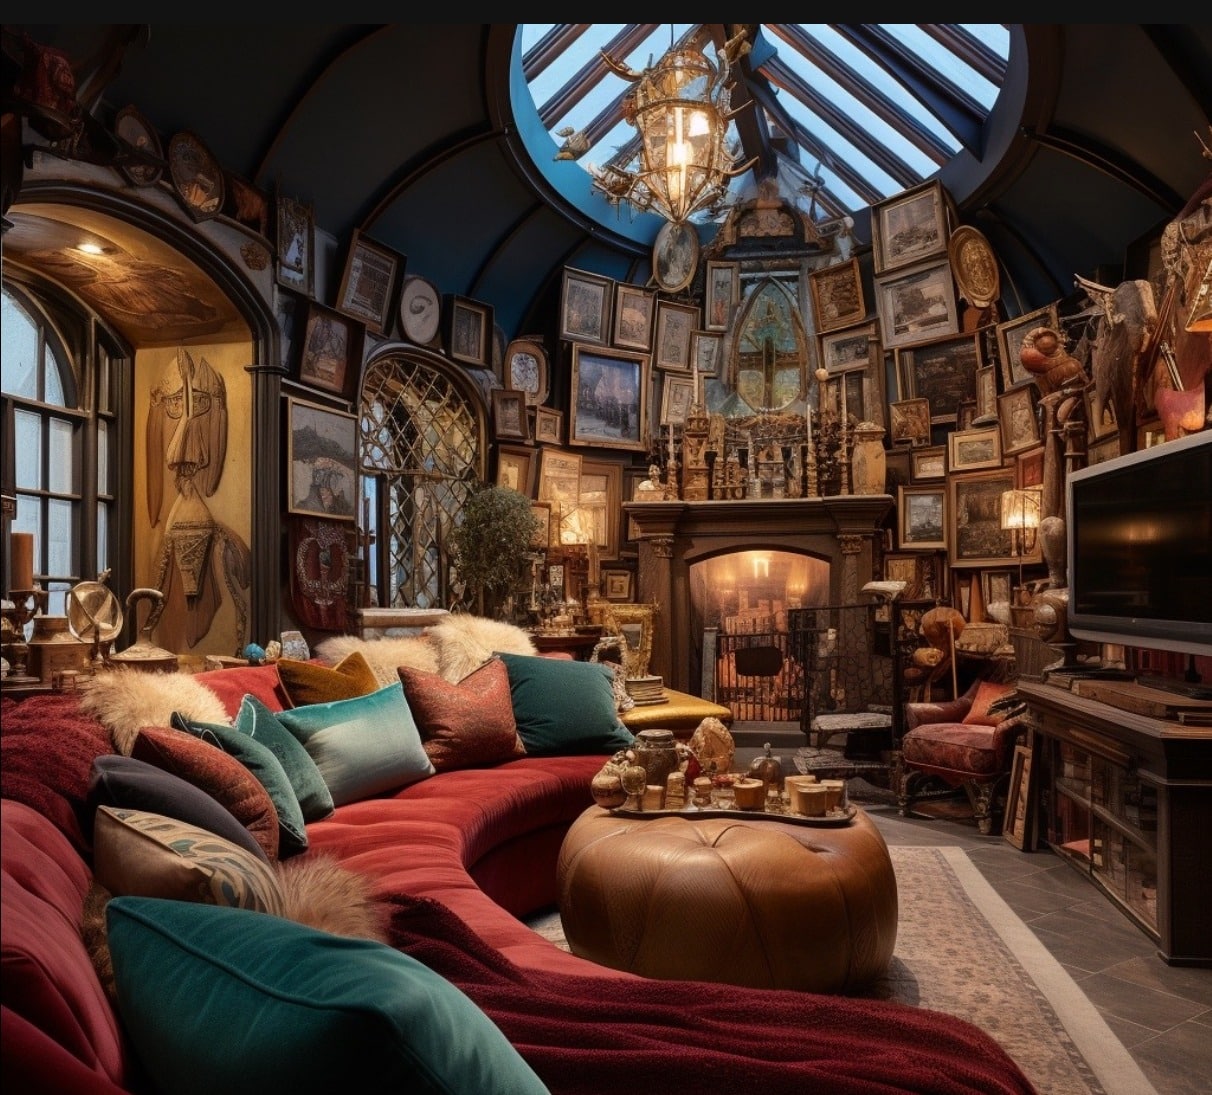 Altona fantasy house with Alice in Wonderland, Harry Potter themes